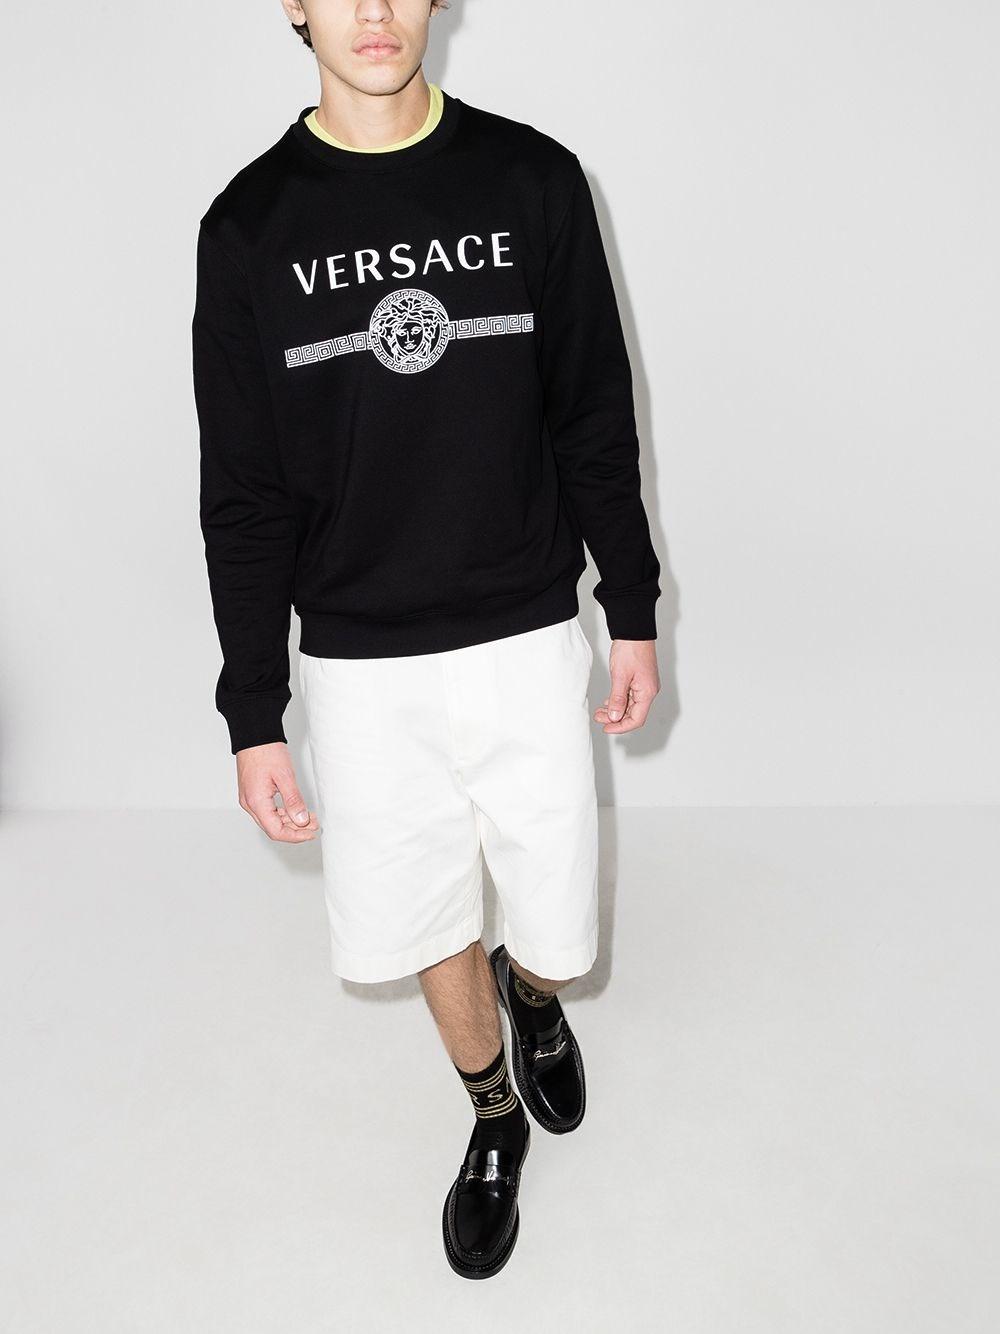 Versace "medusa" Logo Crewneck Sweater in Black for Men | Lyst